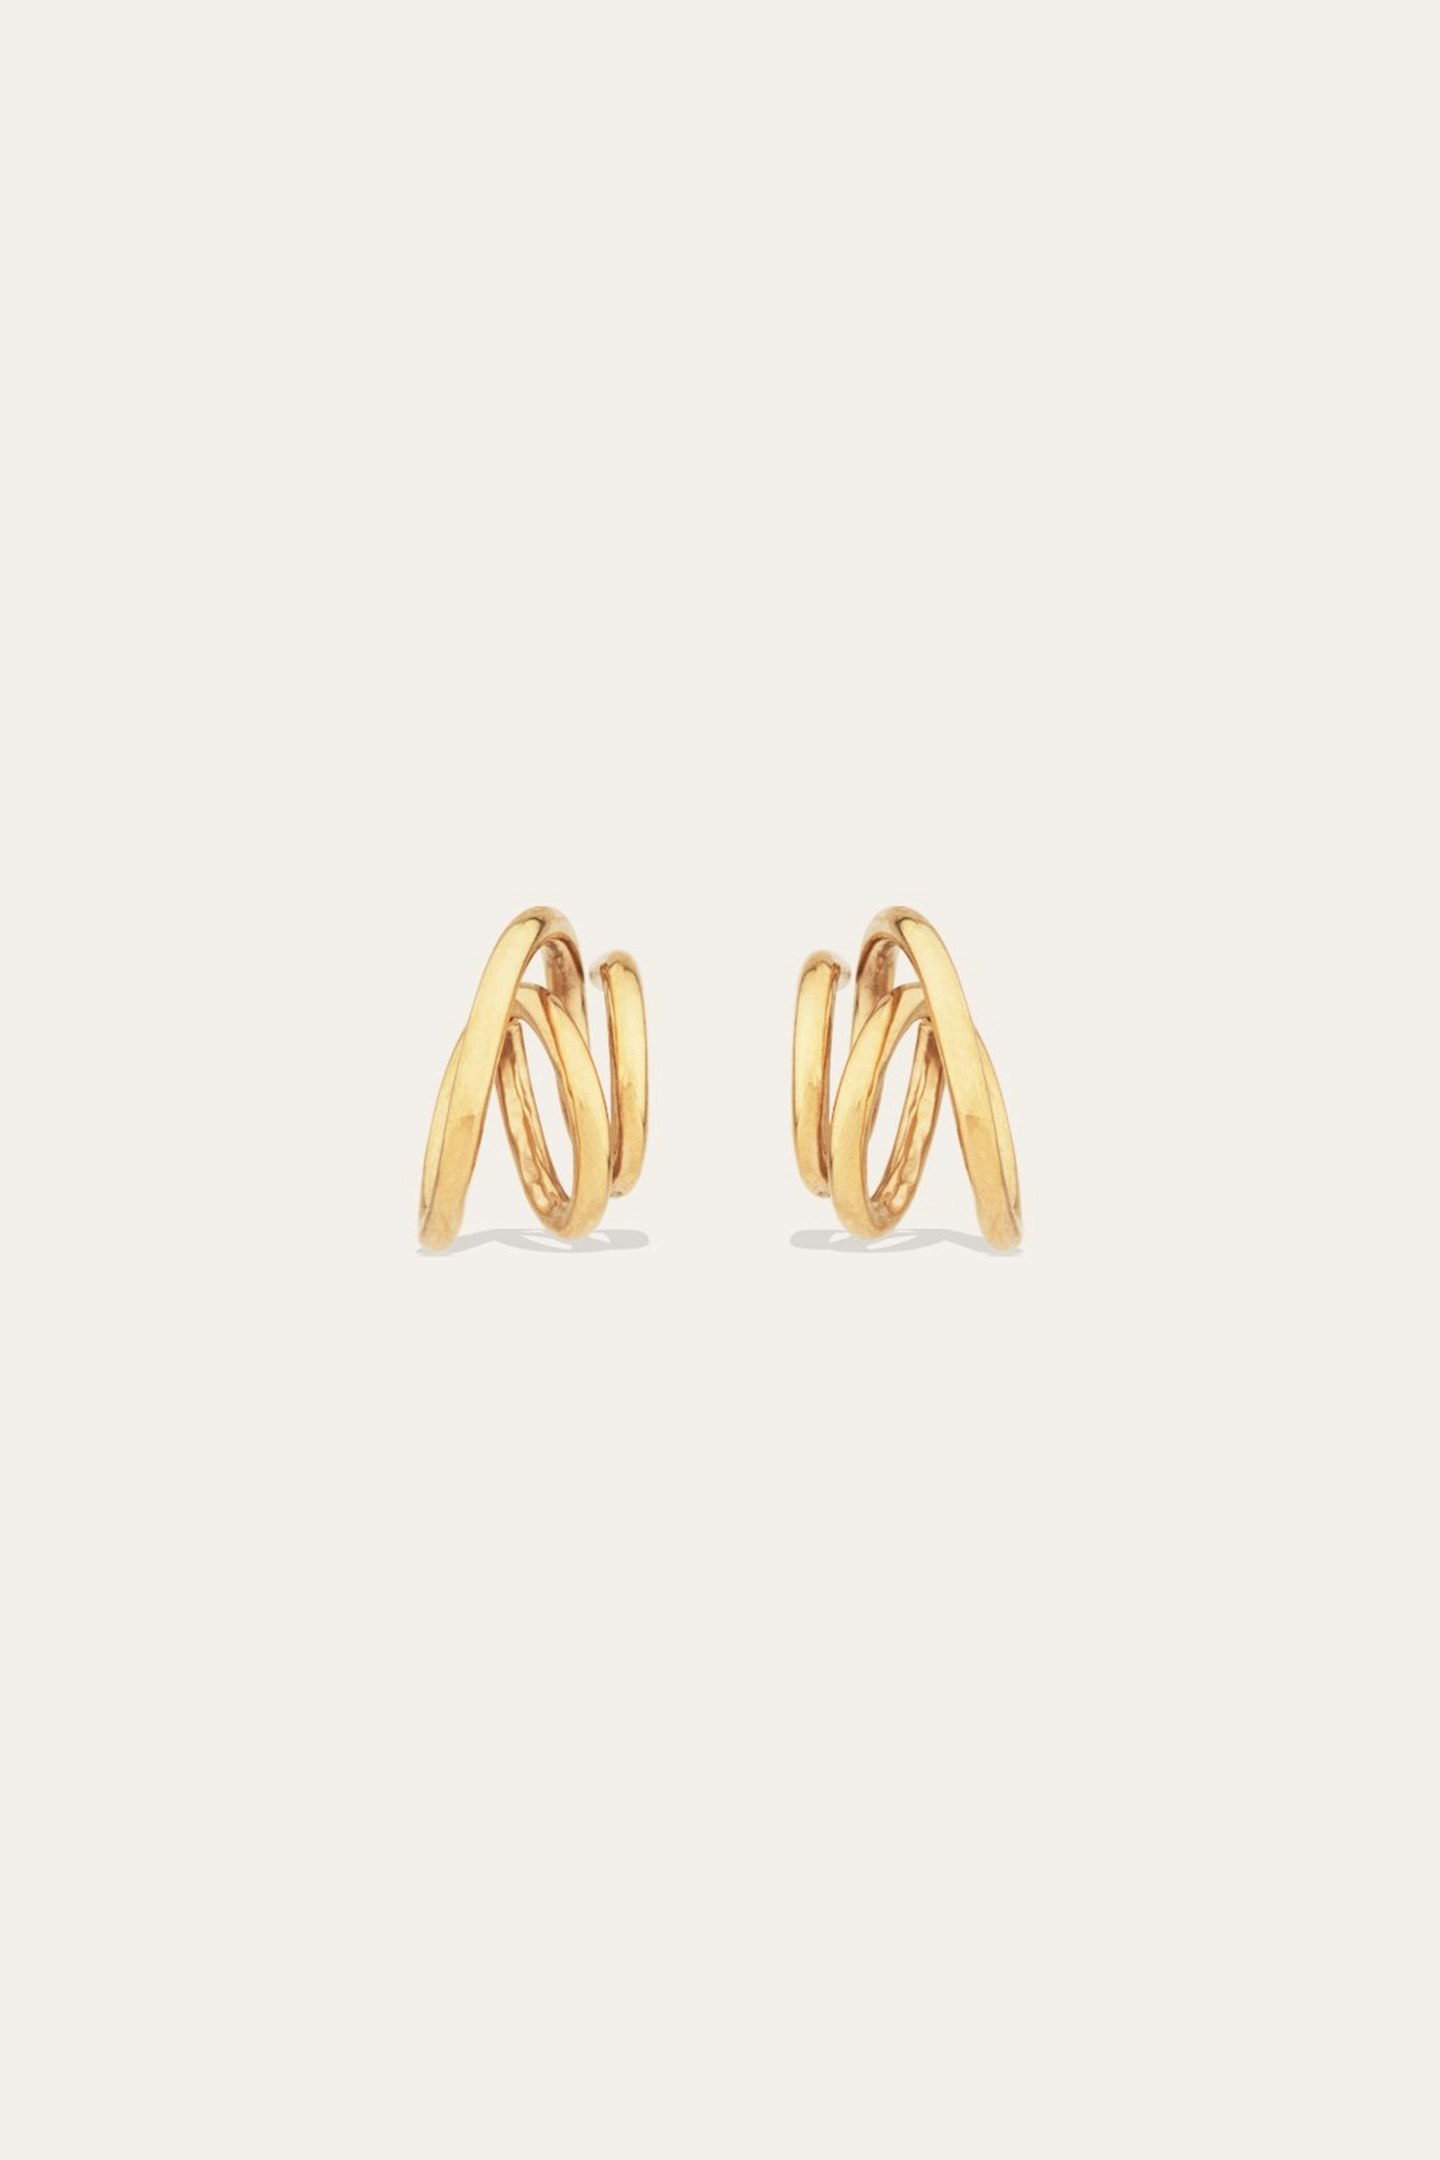 Leo - Completedworks, Flow Gold Vermeil Earrings, £175